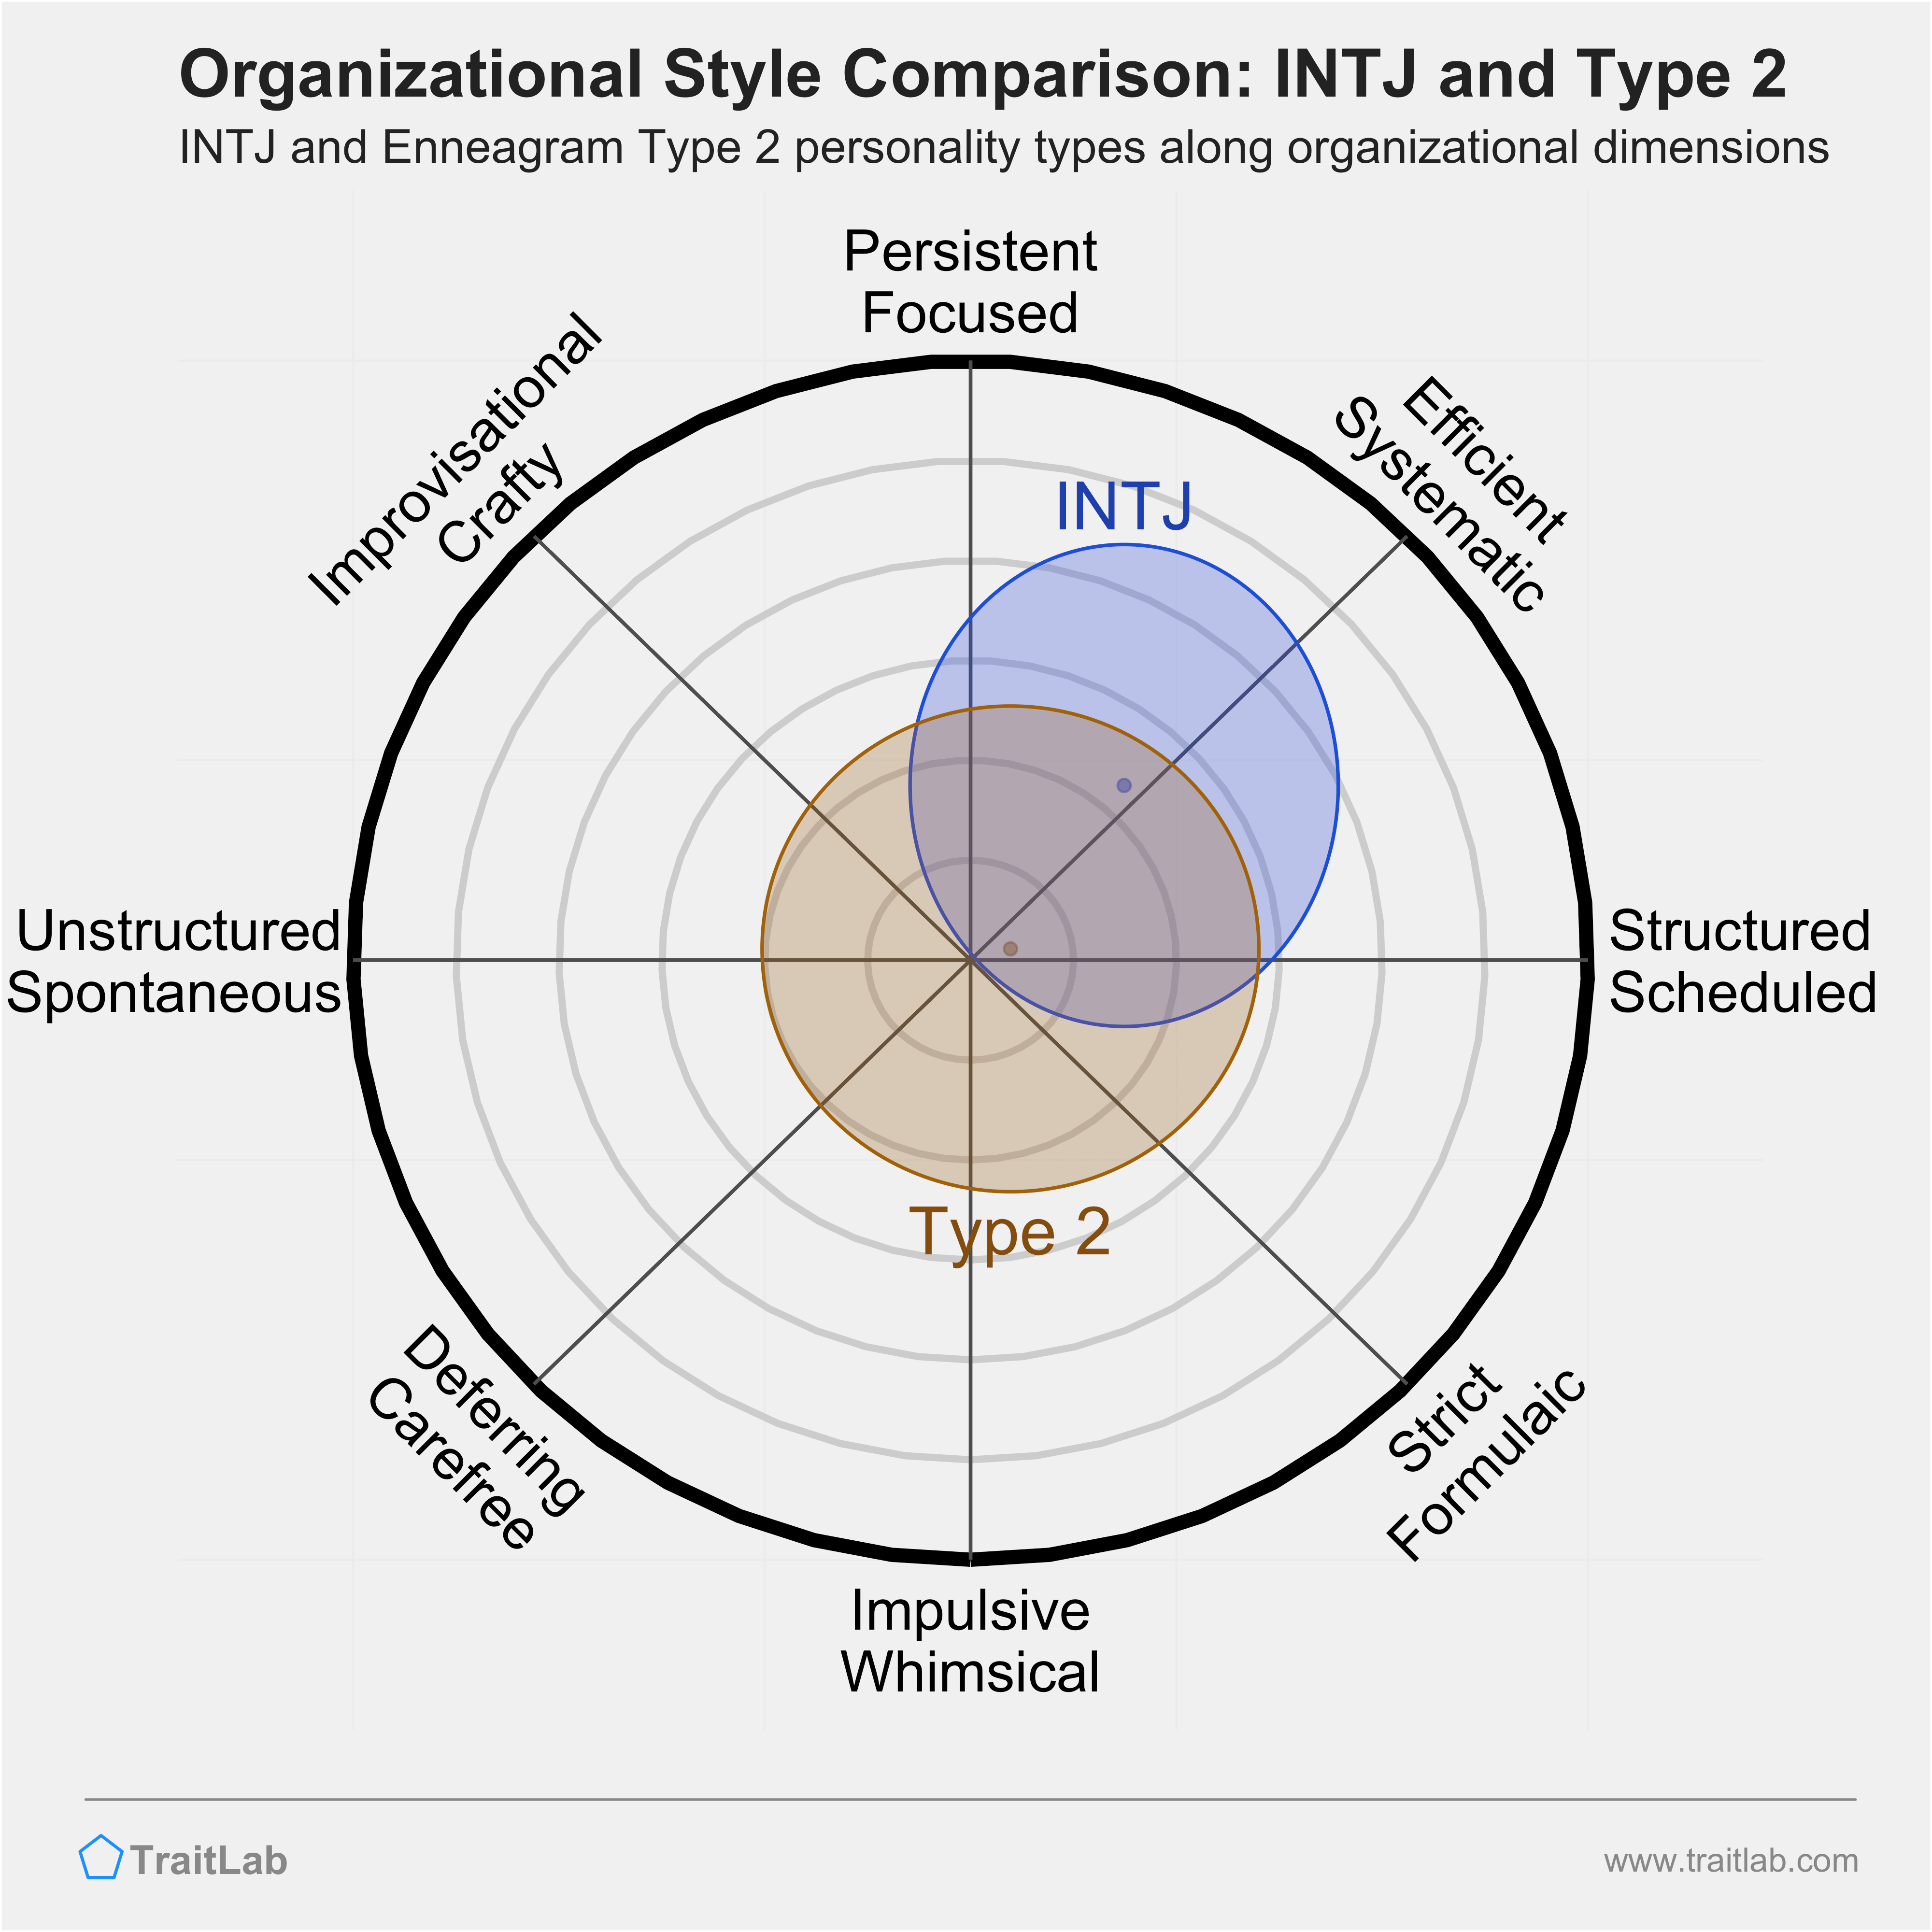 INTJ and Type 2 comparison across organizational dimensions